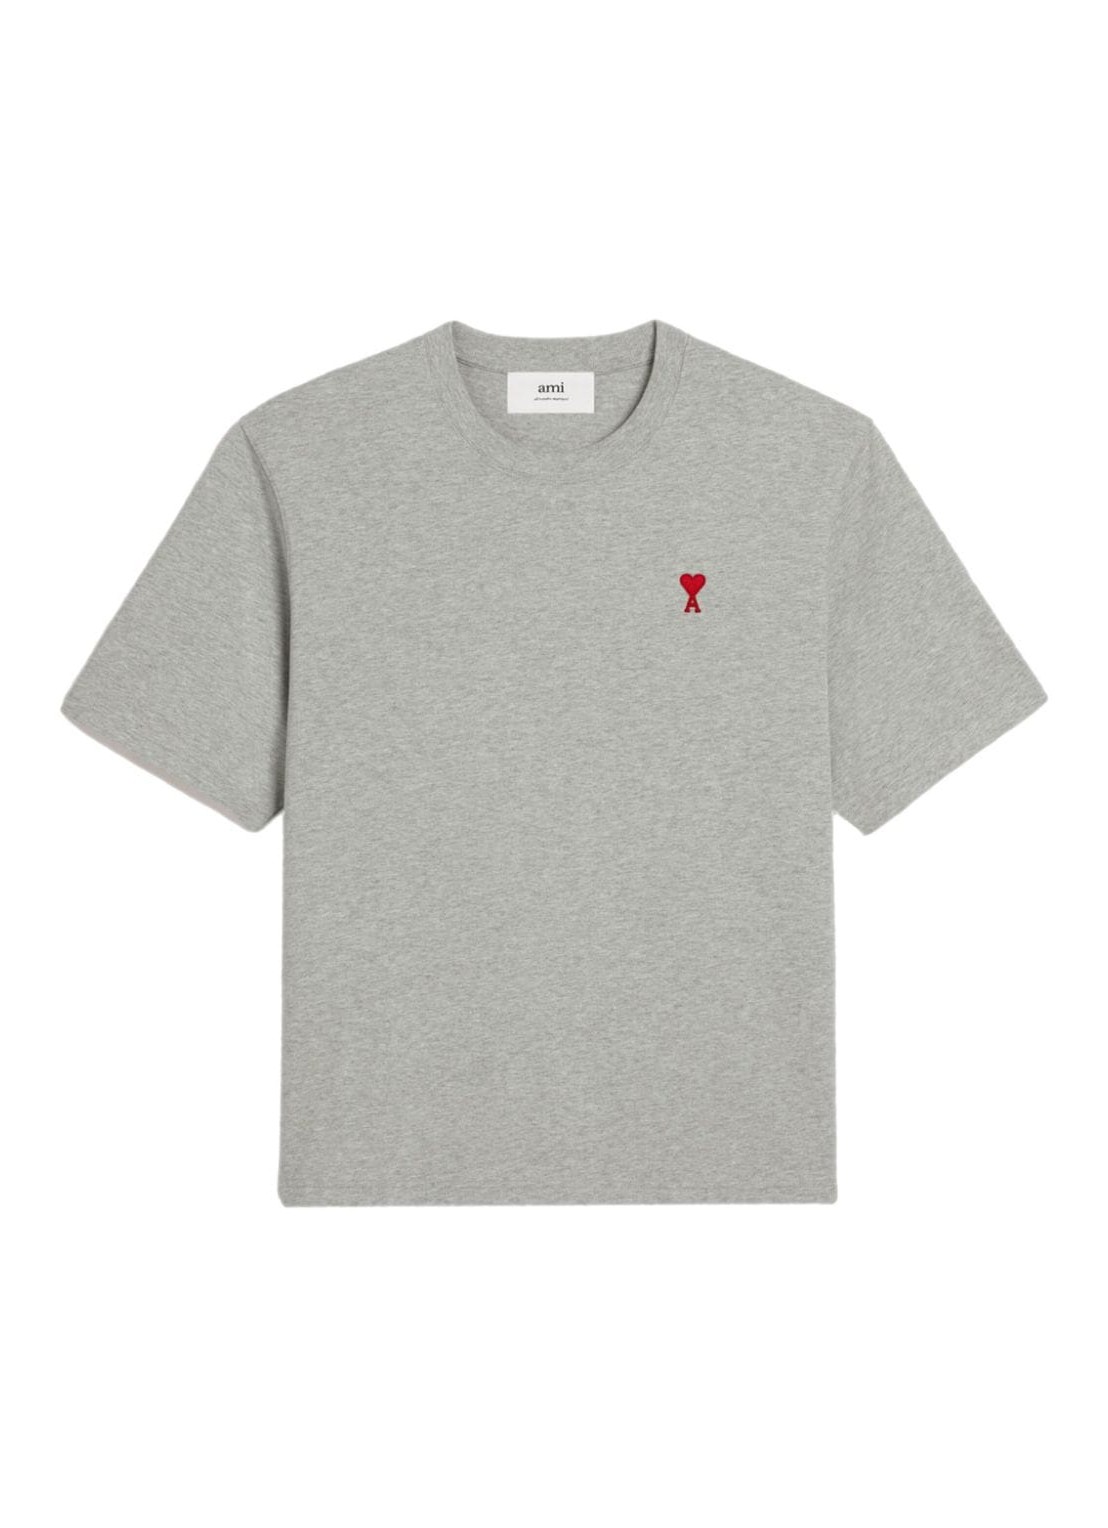 Camiseta ami t-shirt man red ami de coeur tshirt bfuts005726 0951 talla S
 